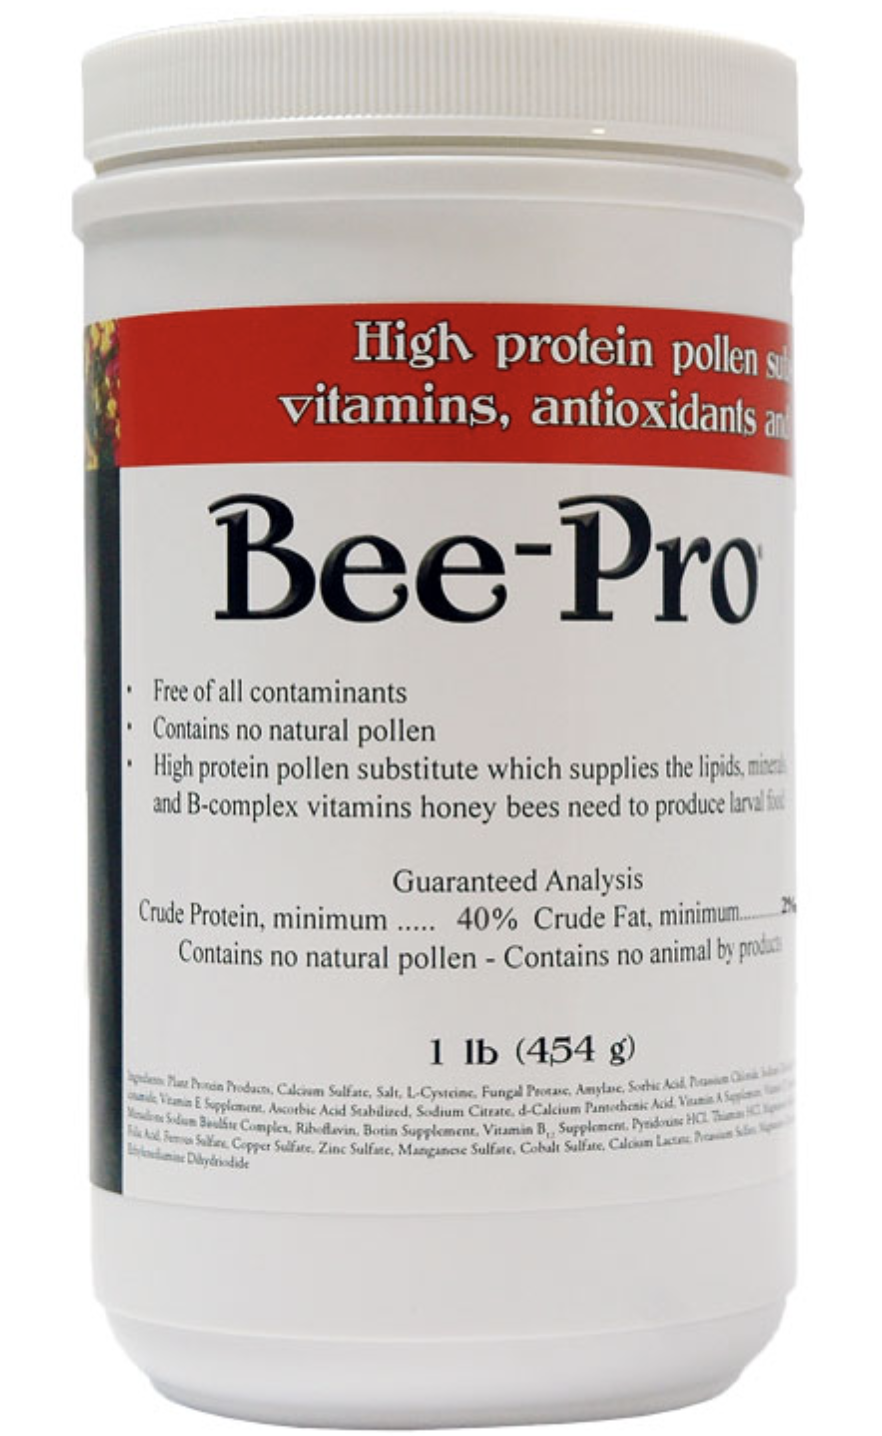 Bee-Pro pollen sub FD-203